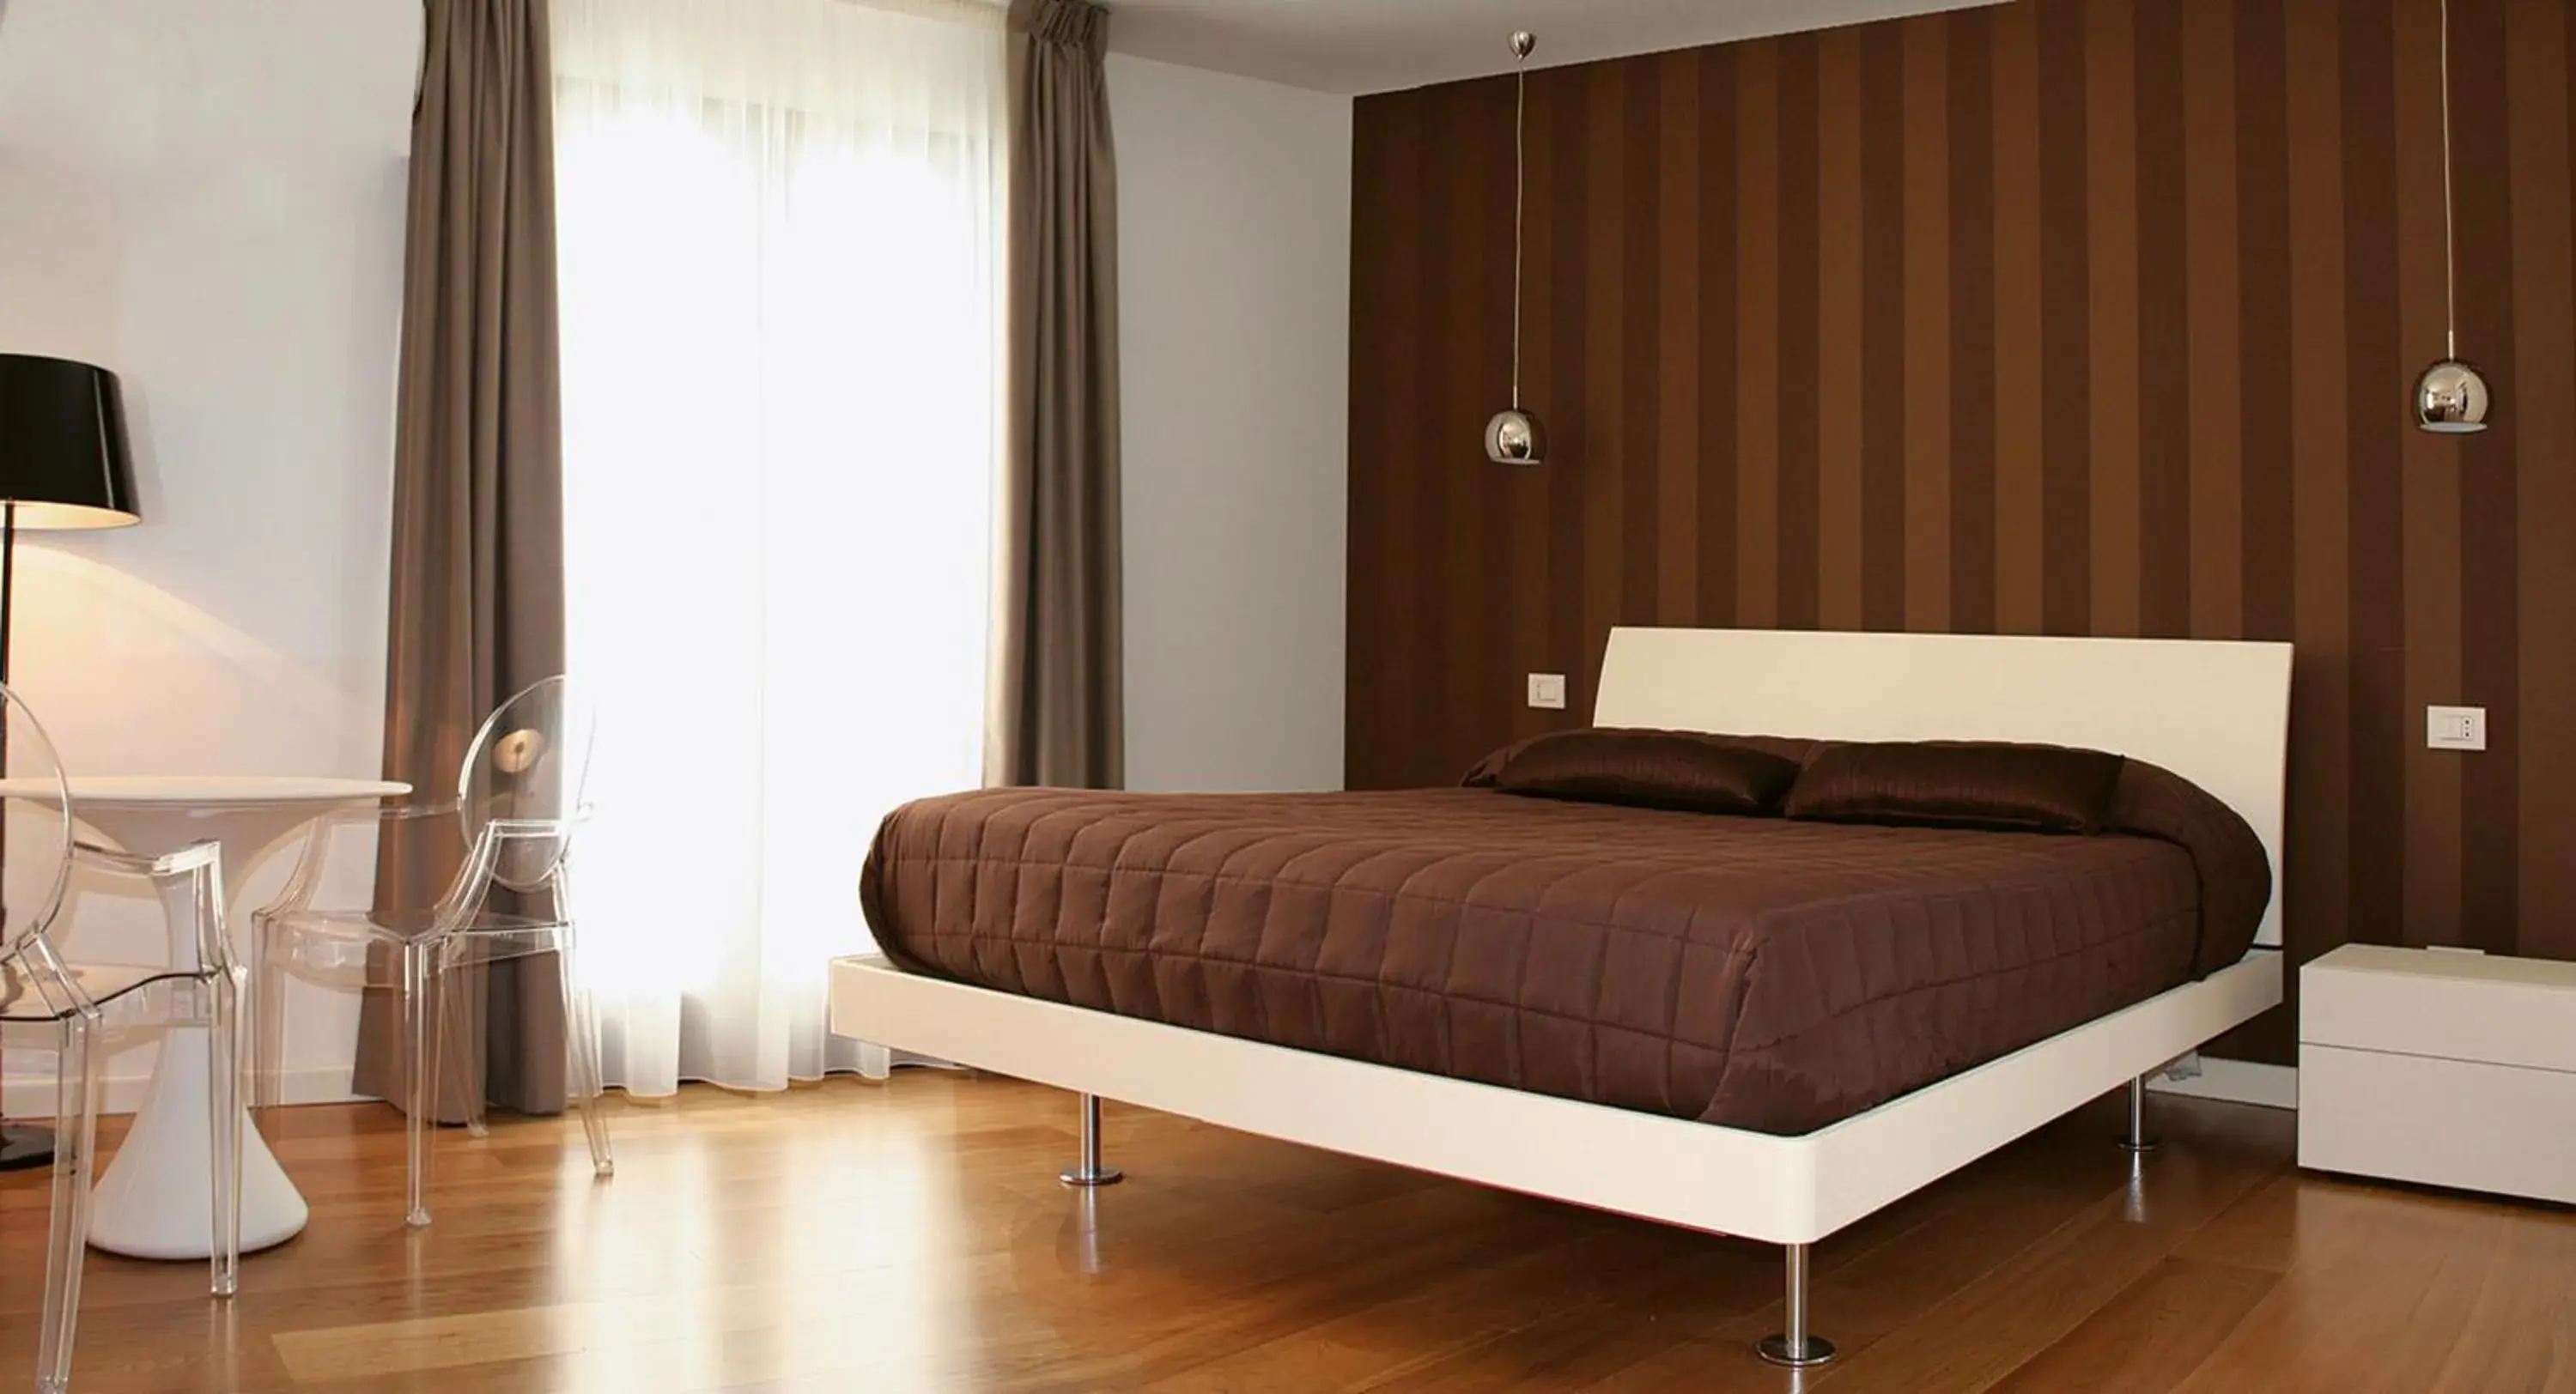 Bedroom, Room Photo in Belmonte Hotel, Dependance Alba Palace Hotel